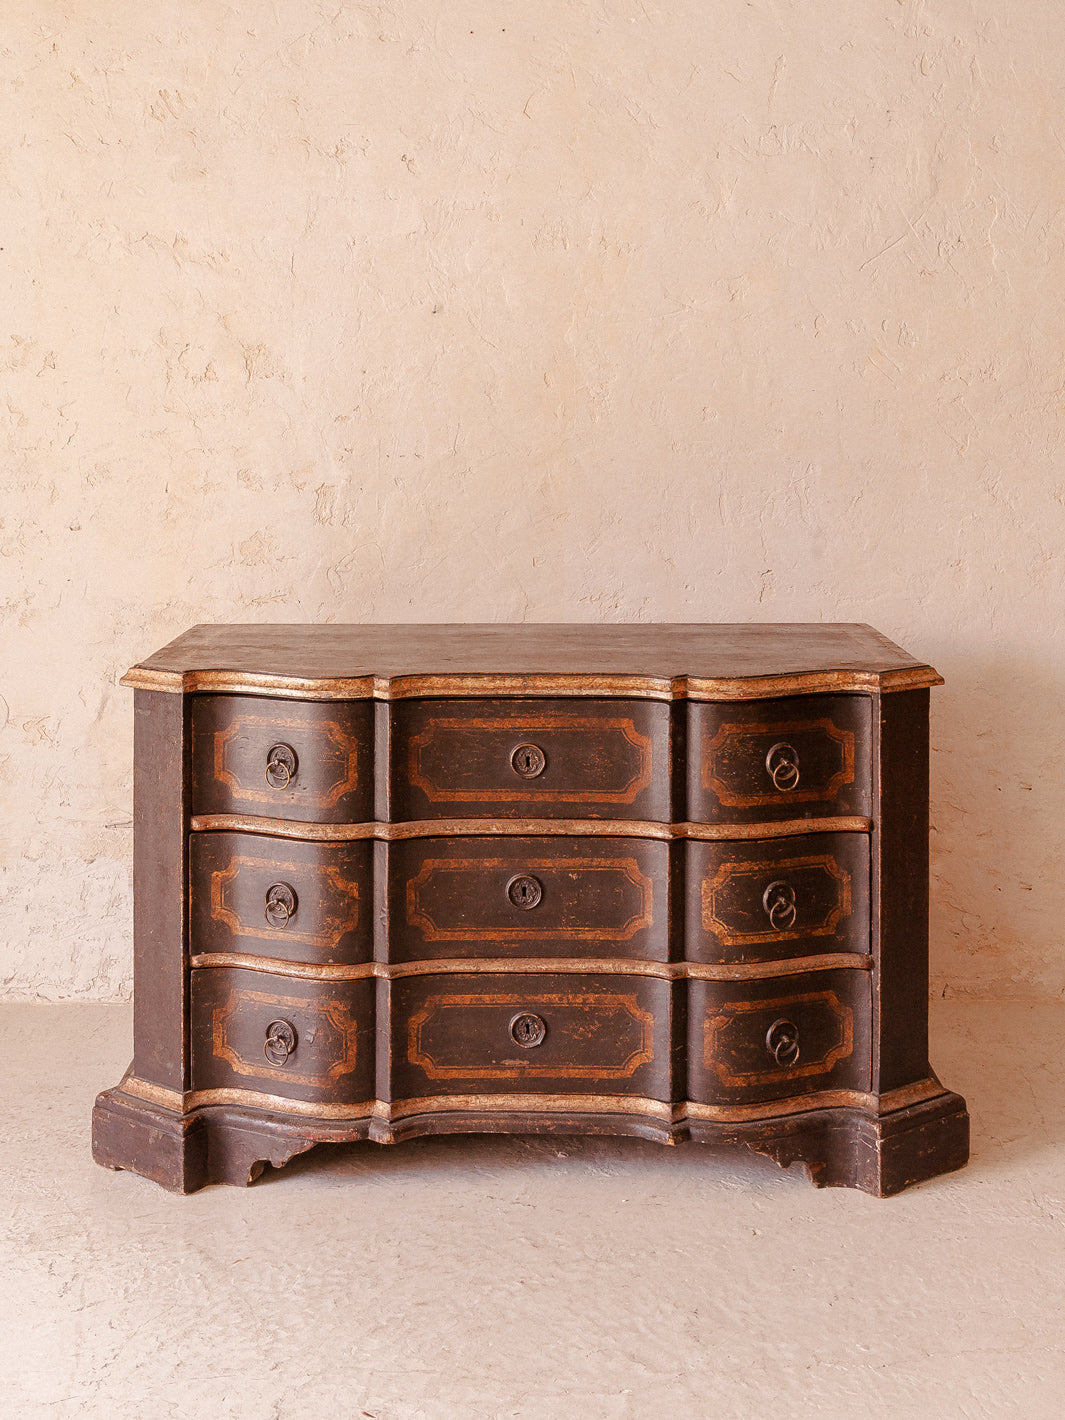 Neapolitan chest of drawers 19th century